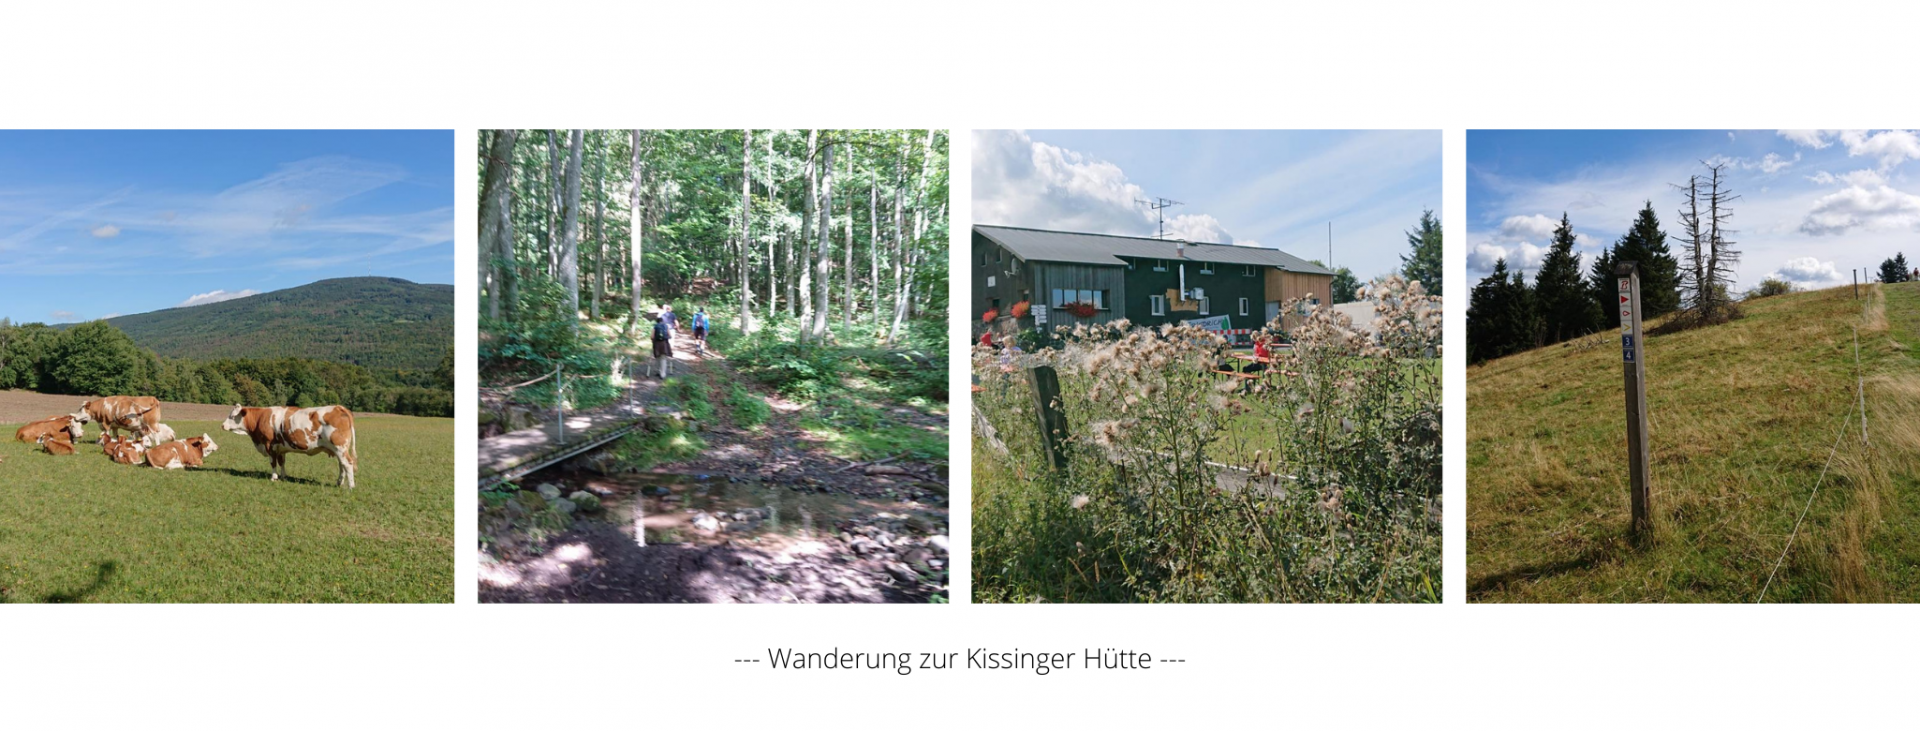 Wanderung zur Kissinger Hütte